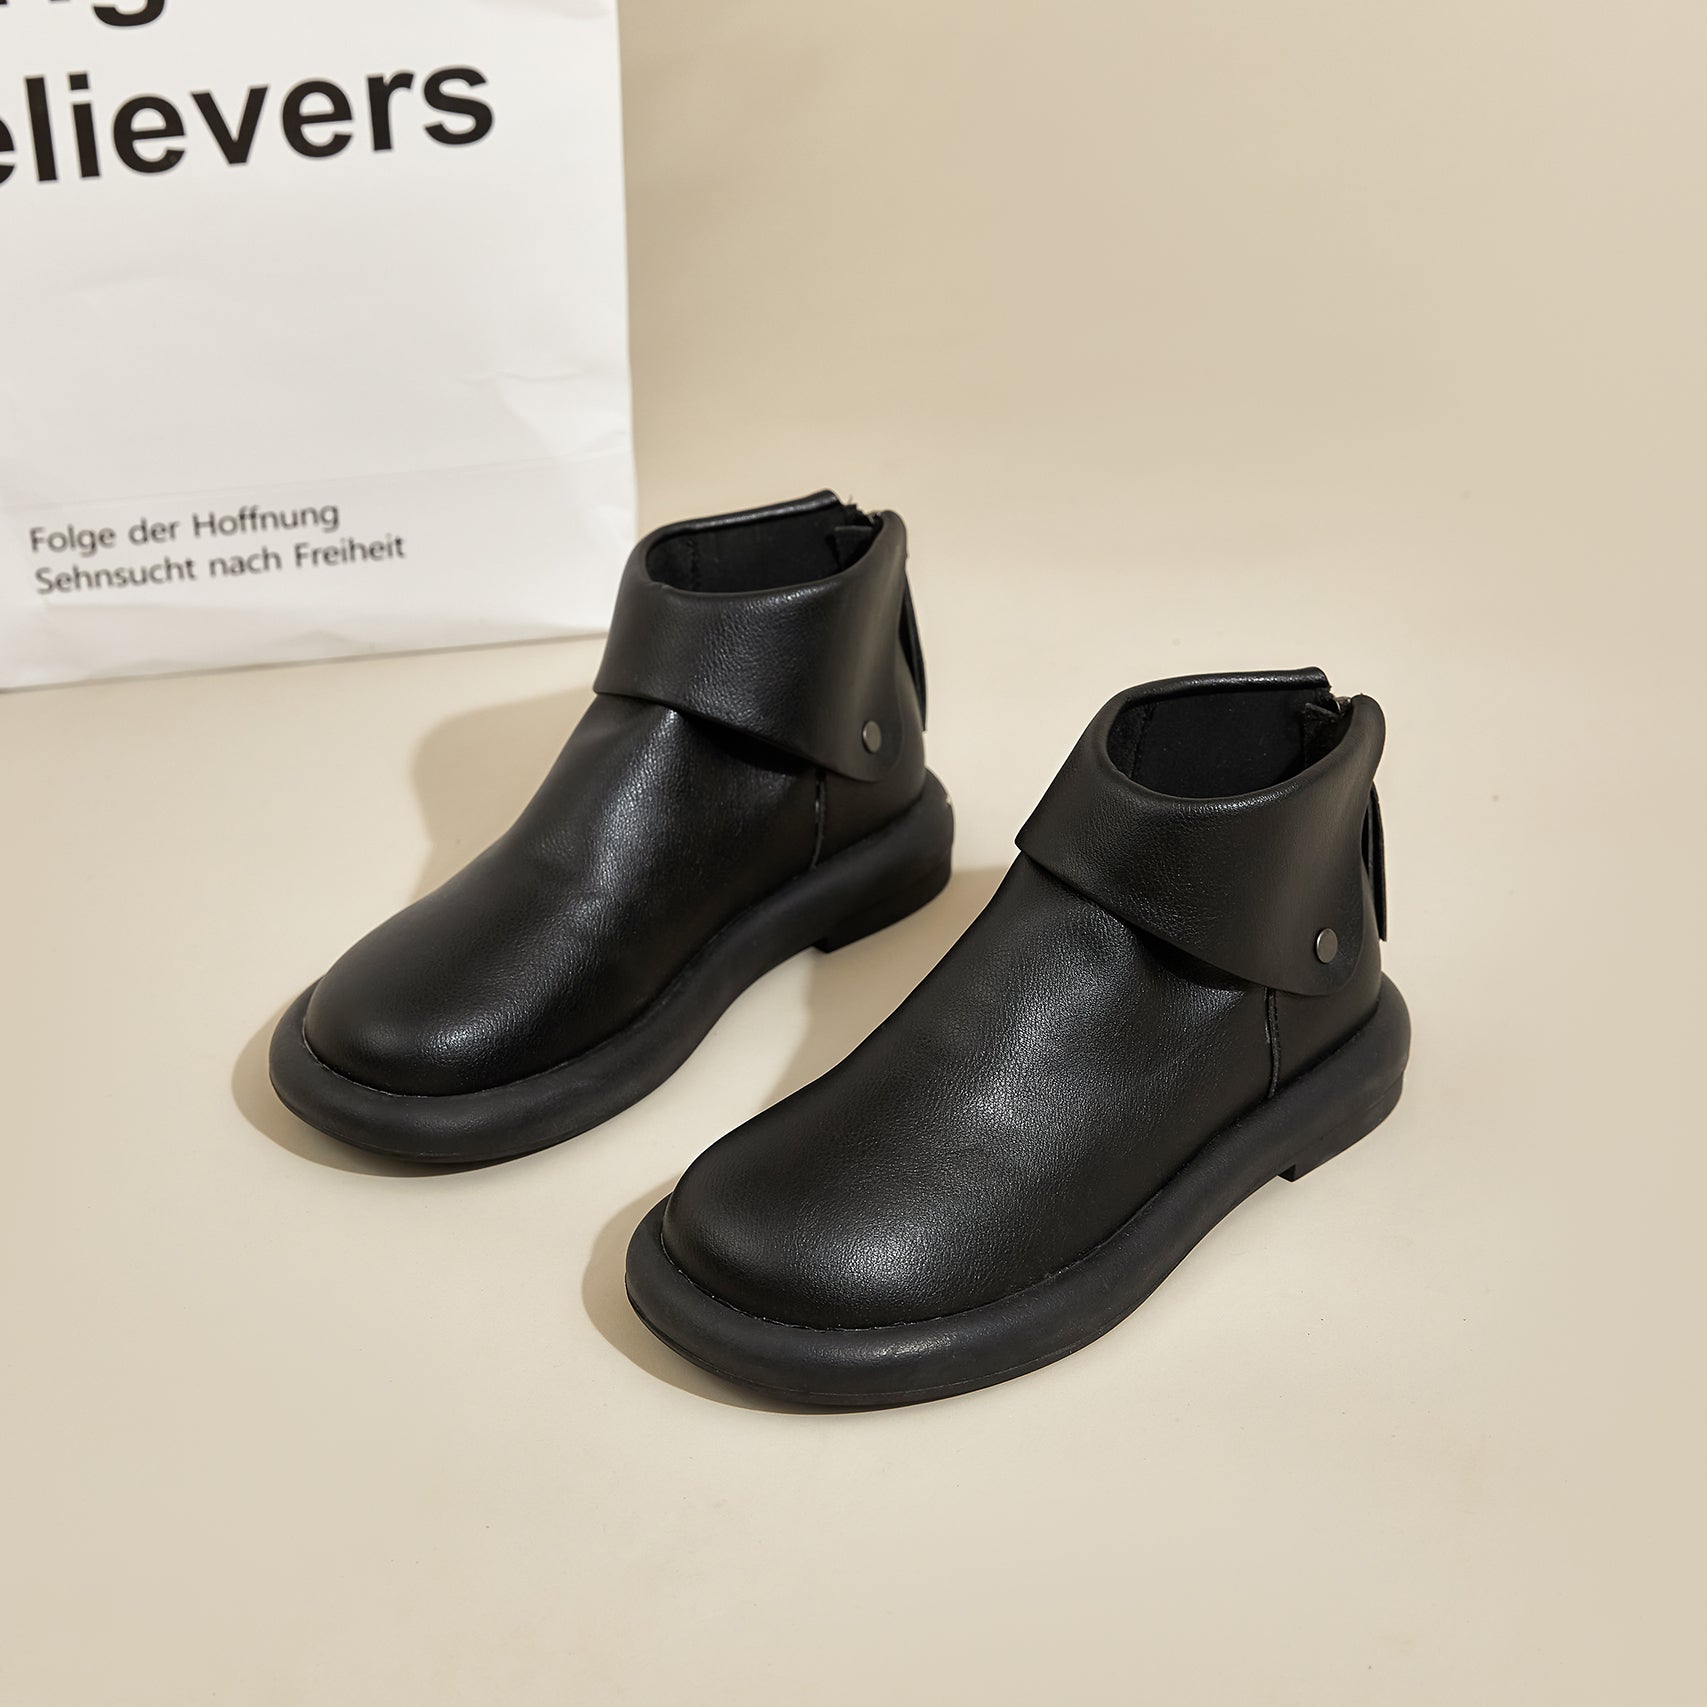 JOY&MARIO Women's Action Leather Zipper Boots in Black-69109W